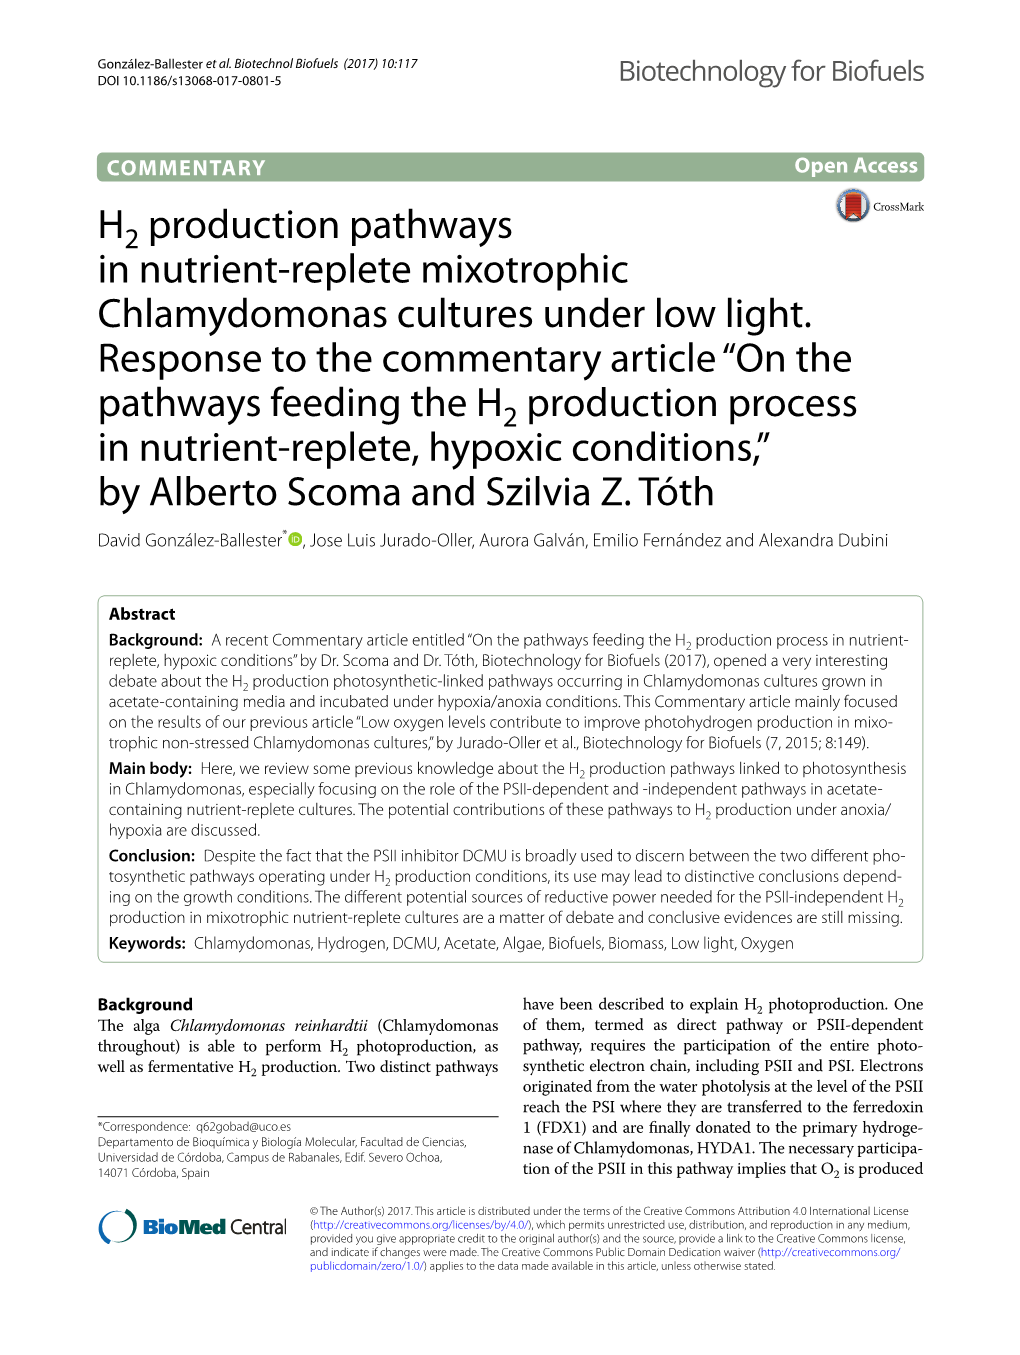 H2 Production Pathways in Nutrient-Replete Mixotrophic